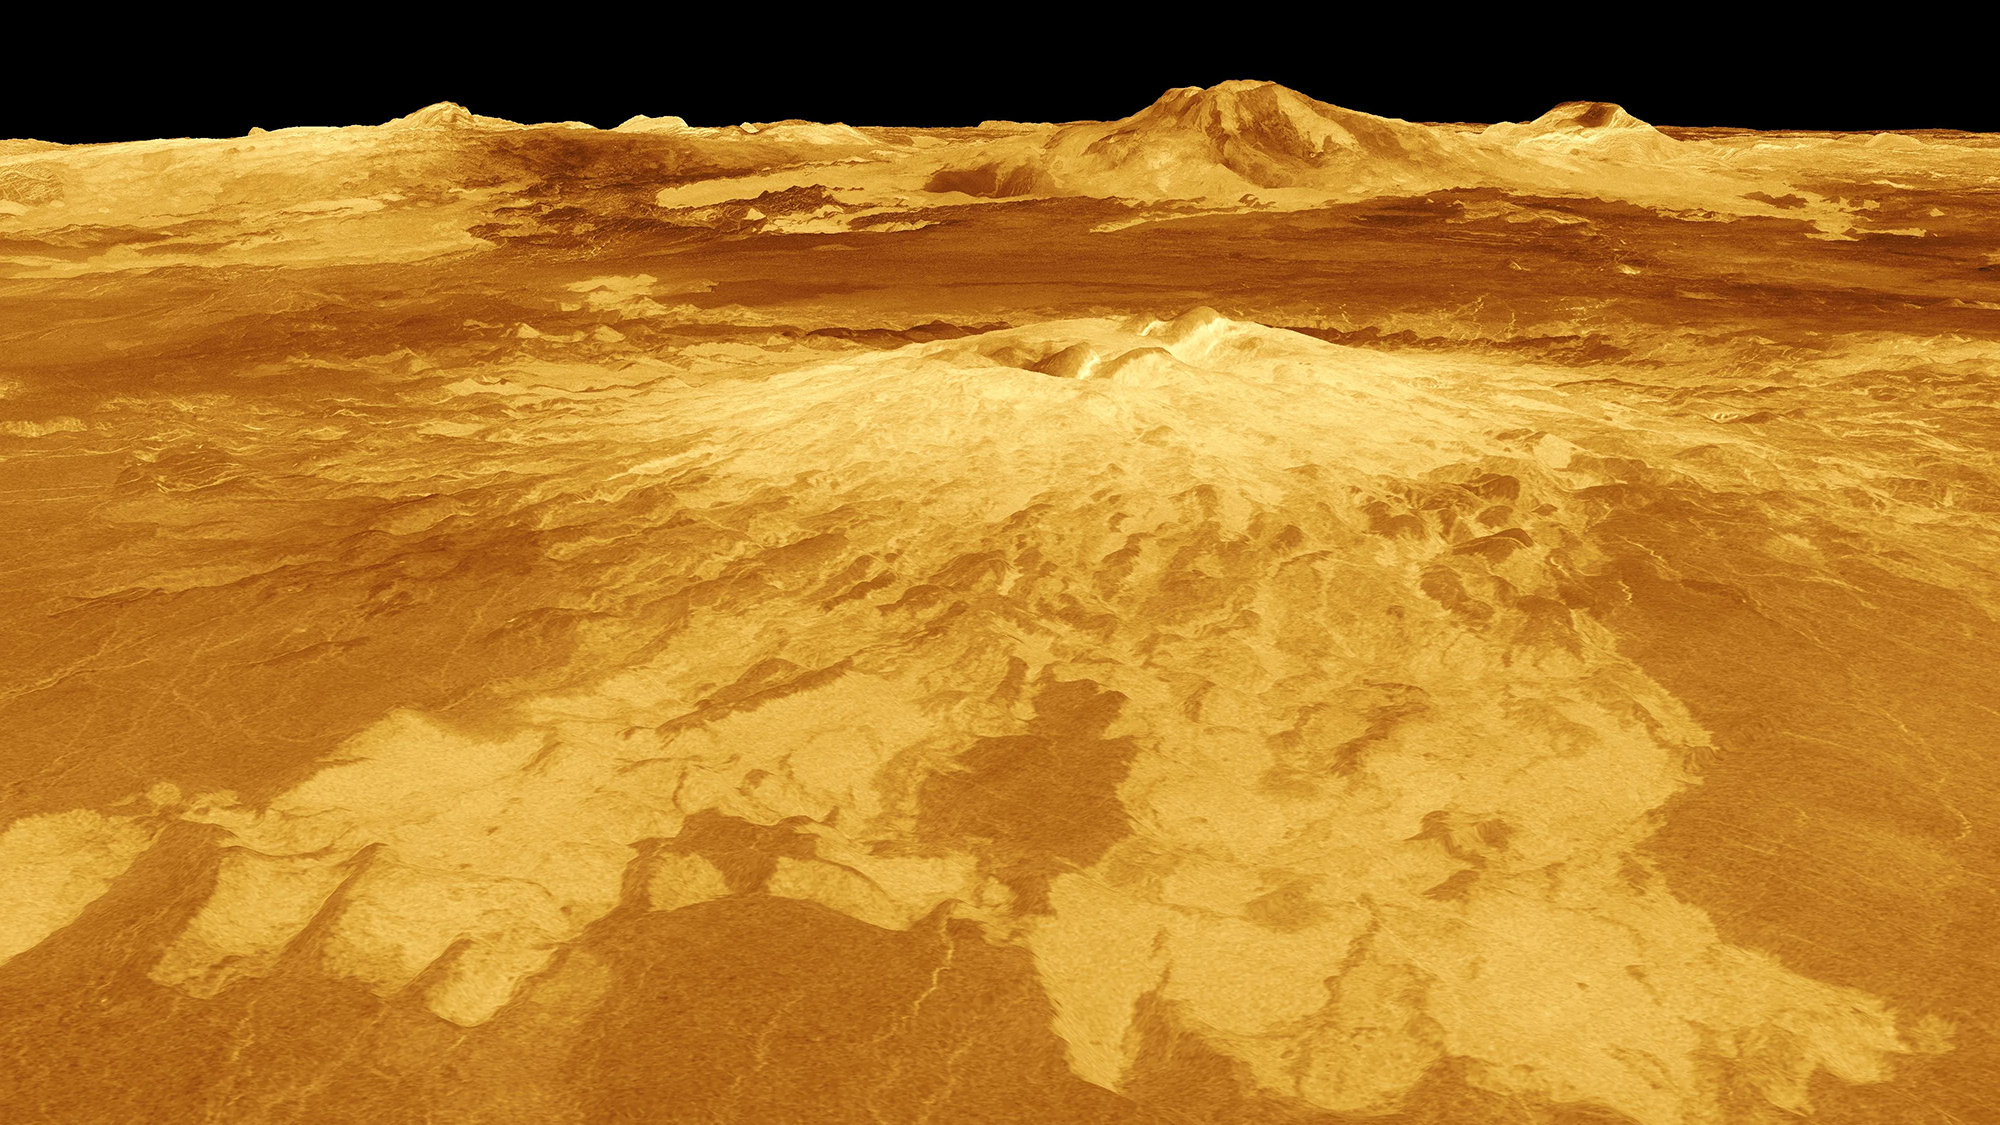 Earth-like plate tectonics may have shaped Venus billions of years ago